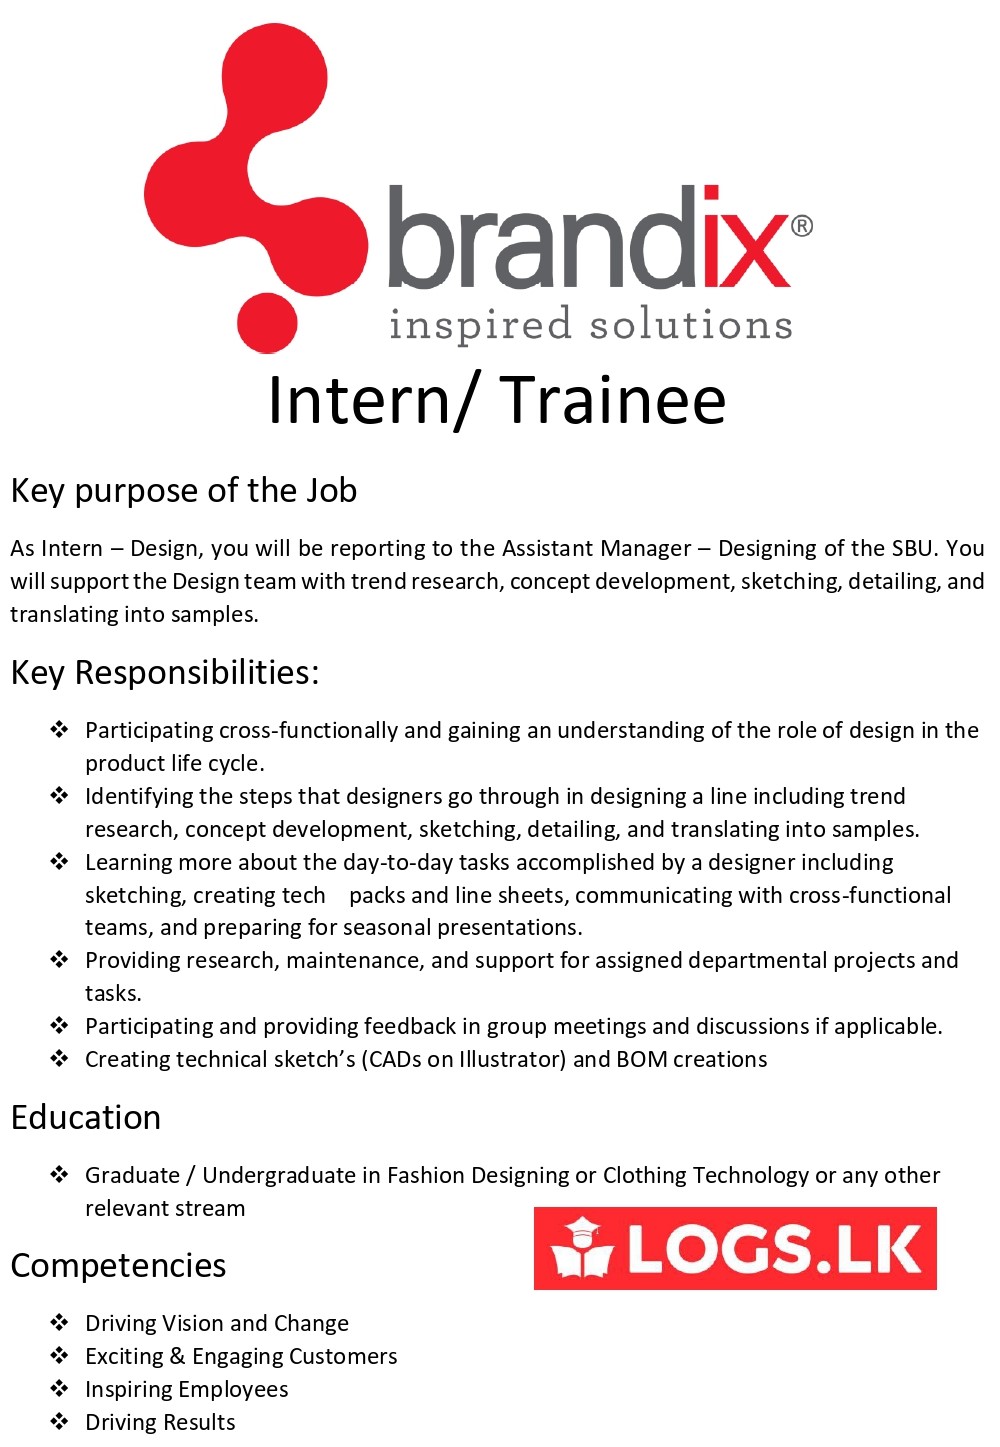 Intern / Trainee Jobs Vacancies - Brandix Sri Lanka Jobs Vacancies Details